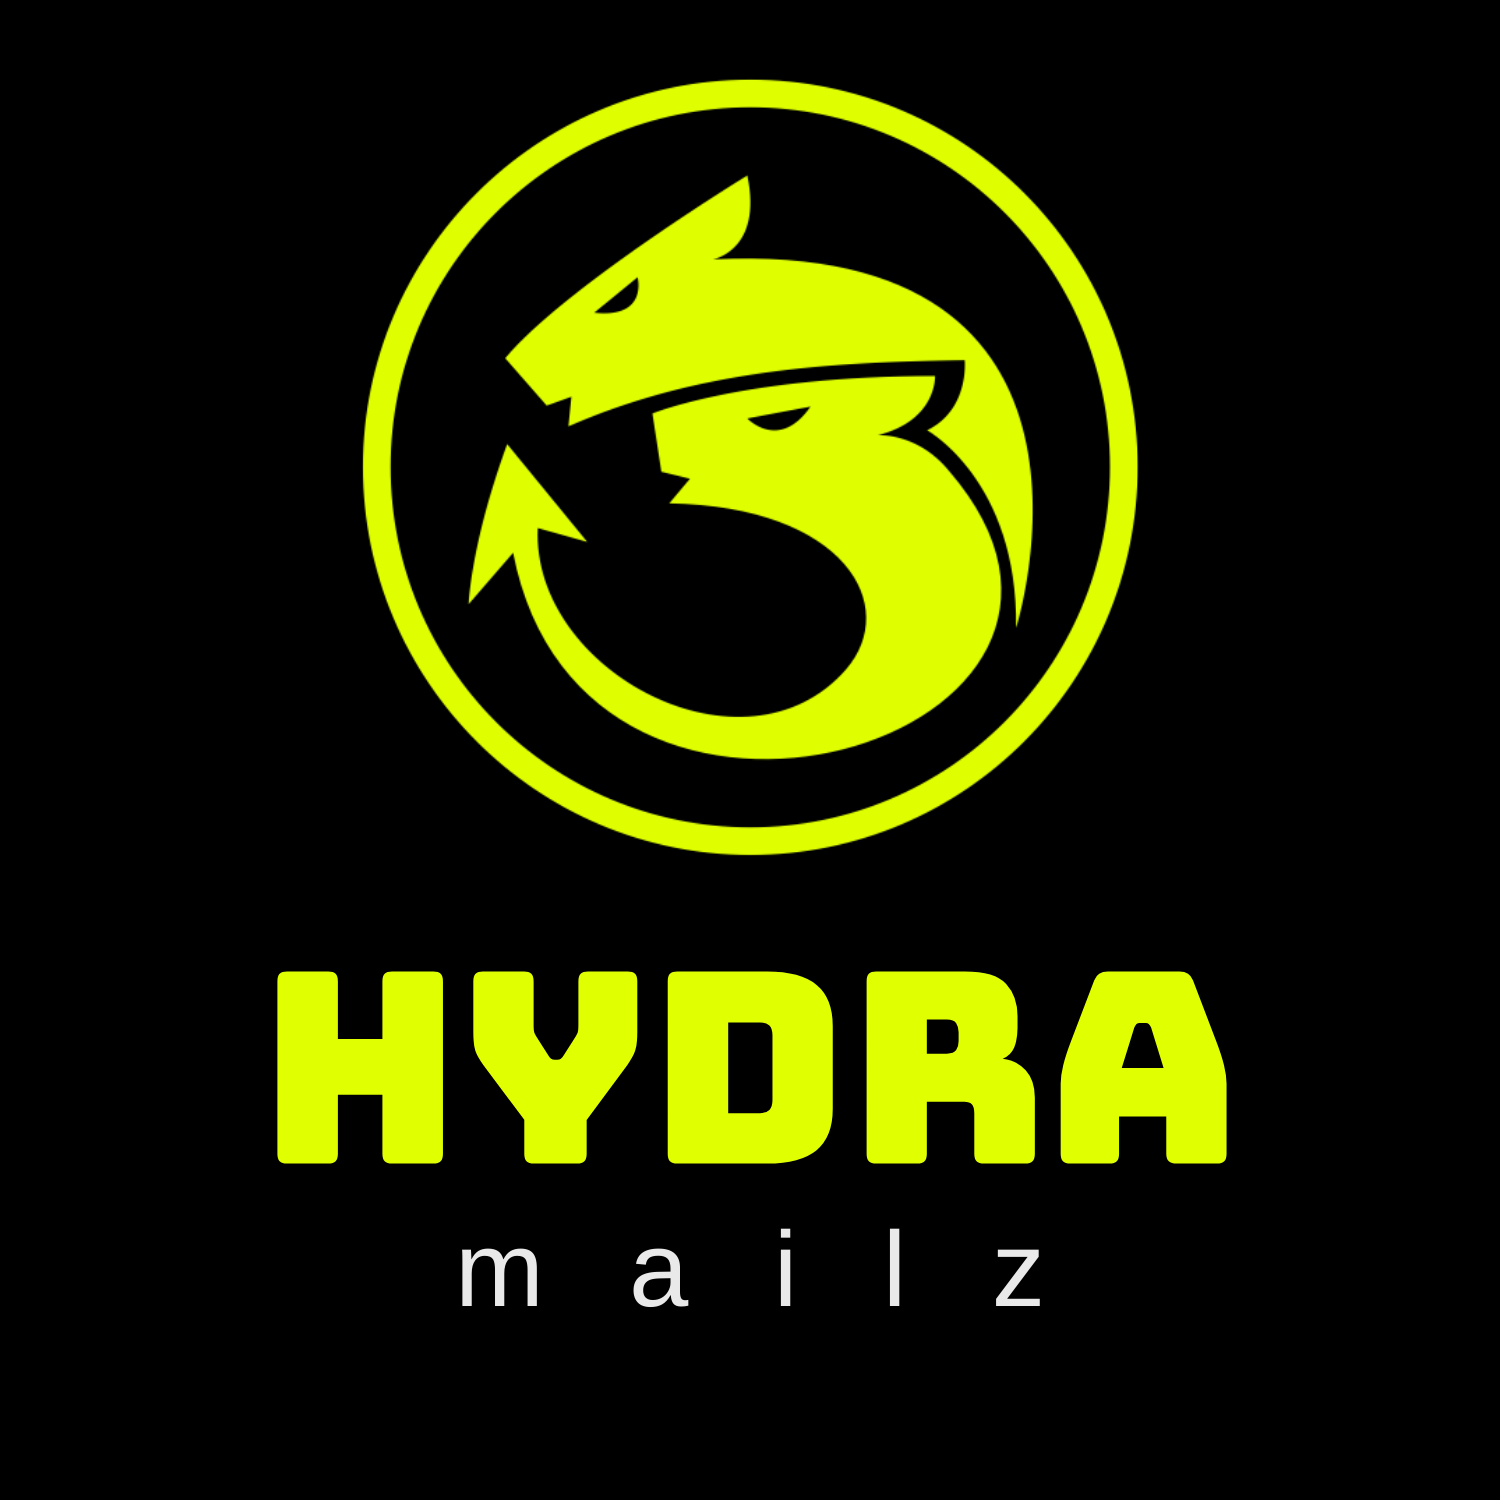 Hydra mailz